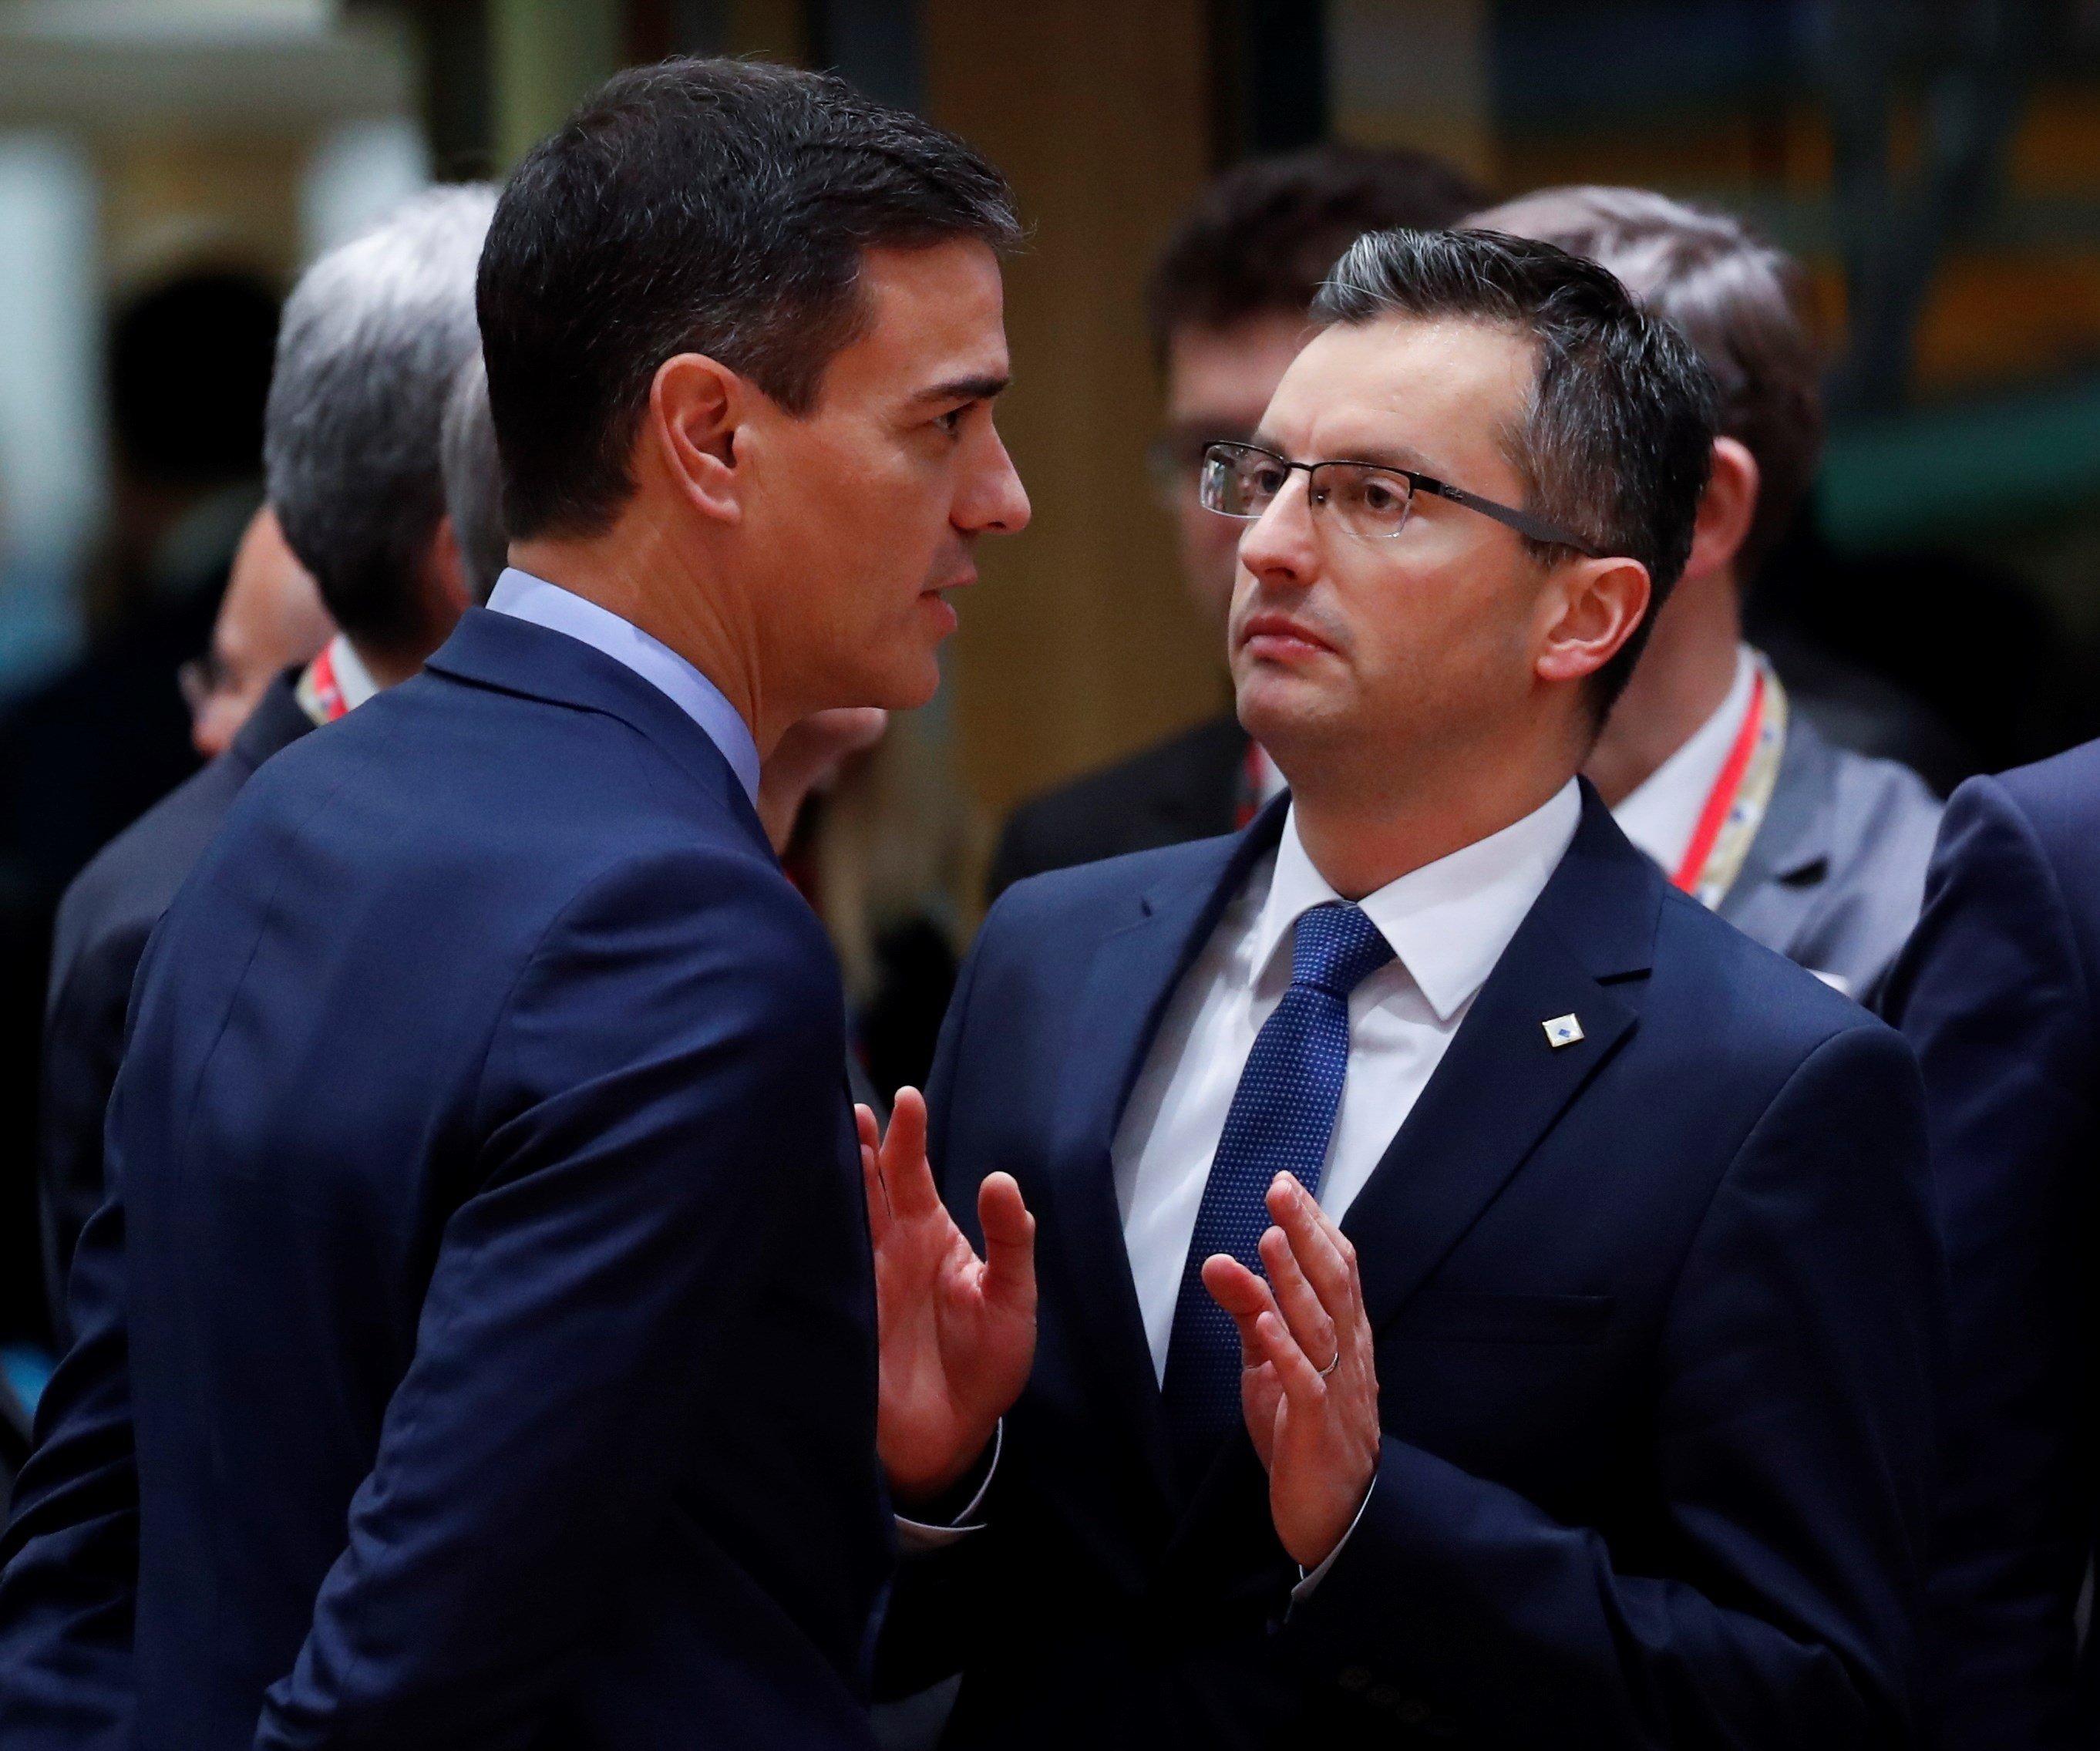 Sánchez intenta calmar al primer ministro de Eslovenia, después de los ataques españoles